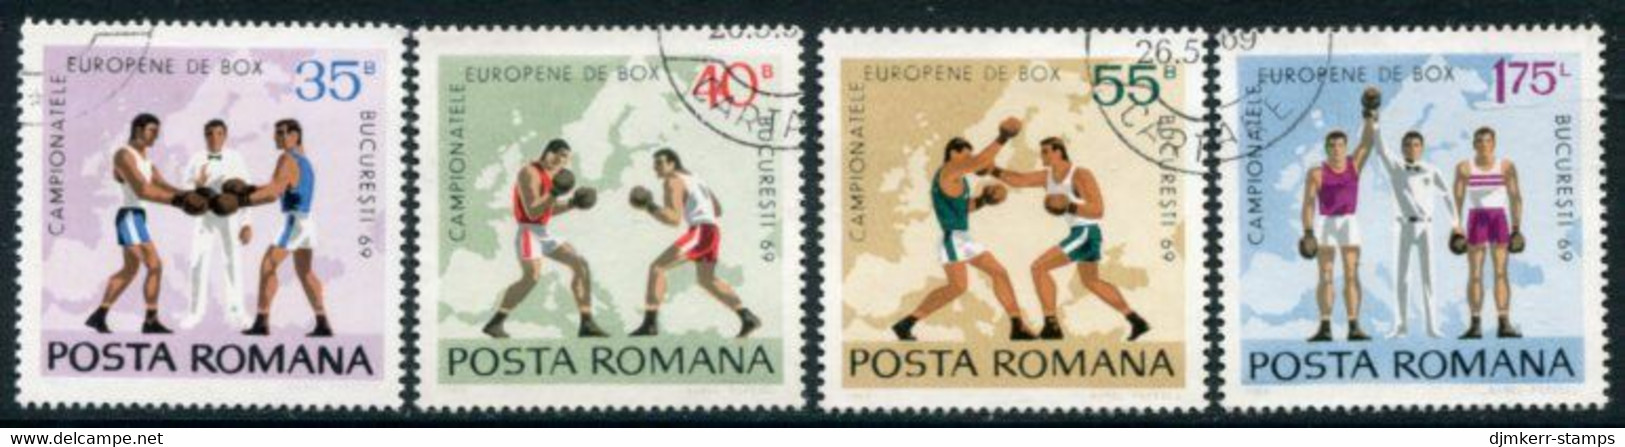 ROMANIA 1969 European Boxing Championship Used  Michel 2767-70 - Gebruikt